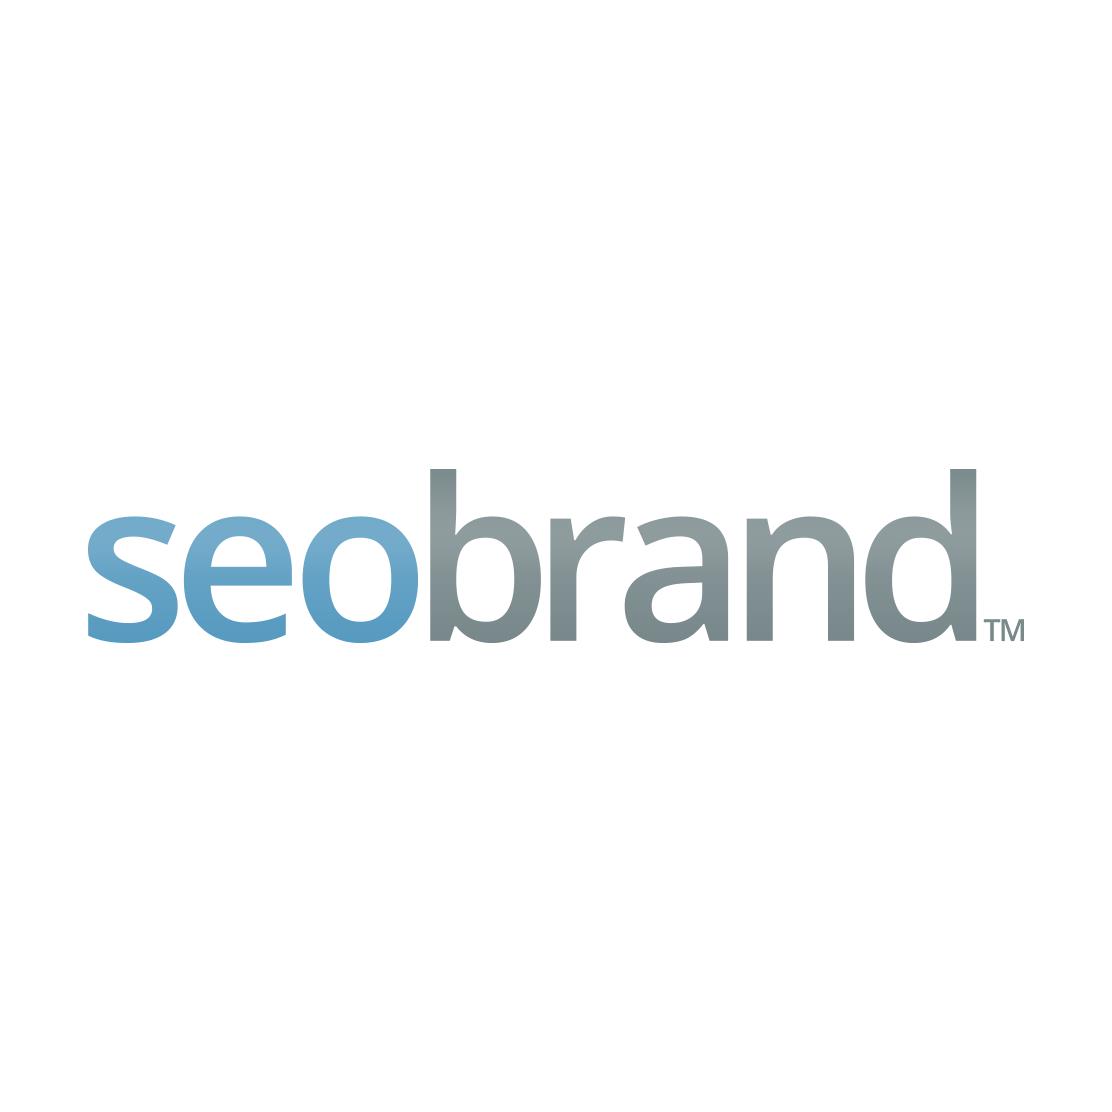 Top Reputation Management Firm Logo: SEO Brand